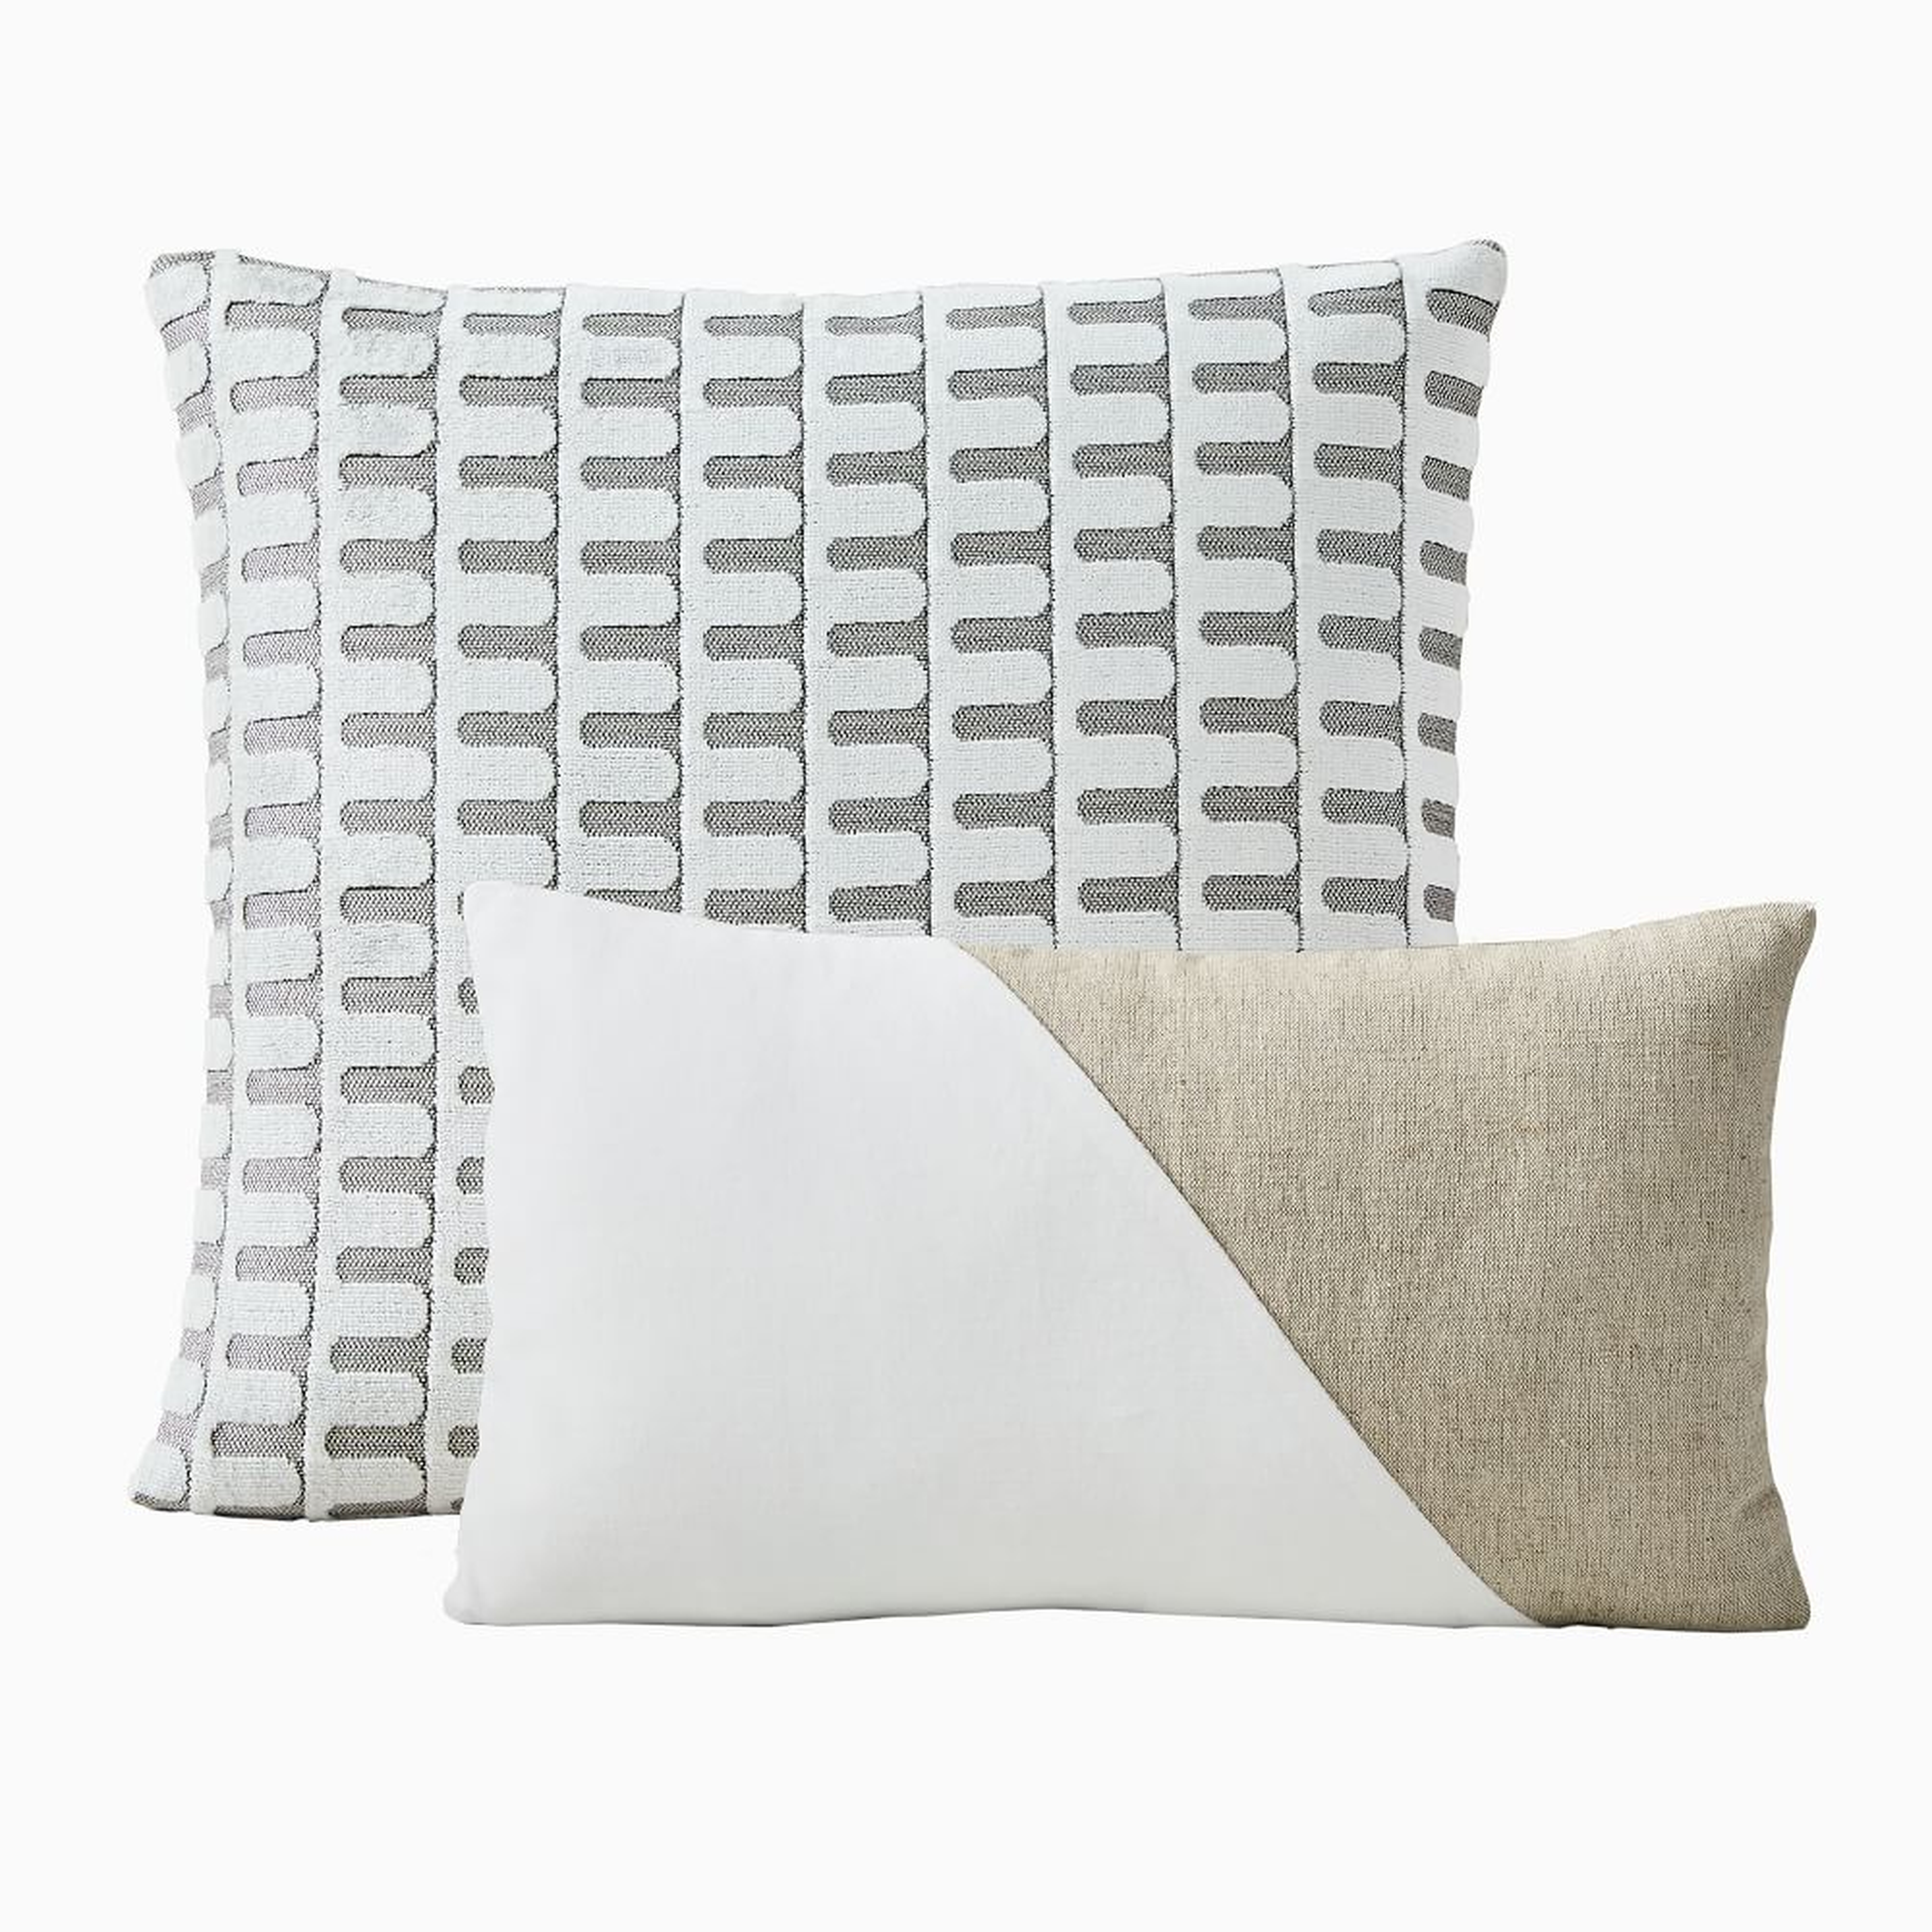 Cut Velvet Archways & Cotton Linen & Vevlet Corners Pillow Cover Set, Stone White, Set of 2 - West Elm